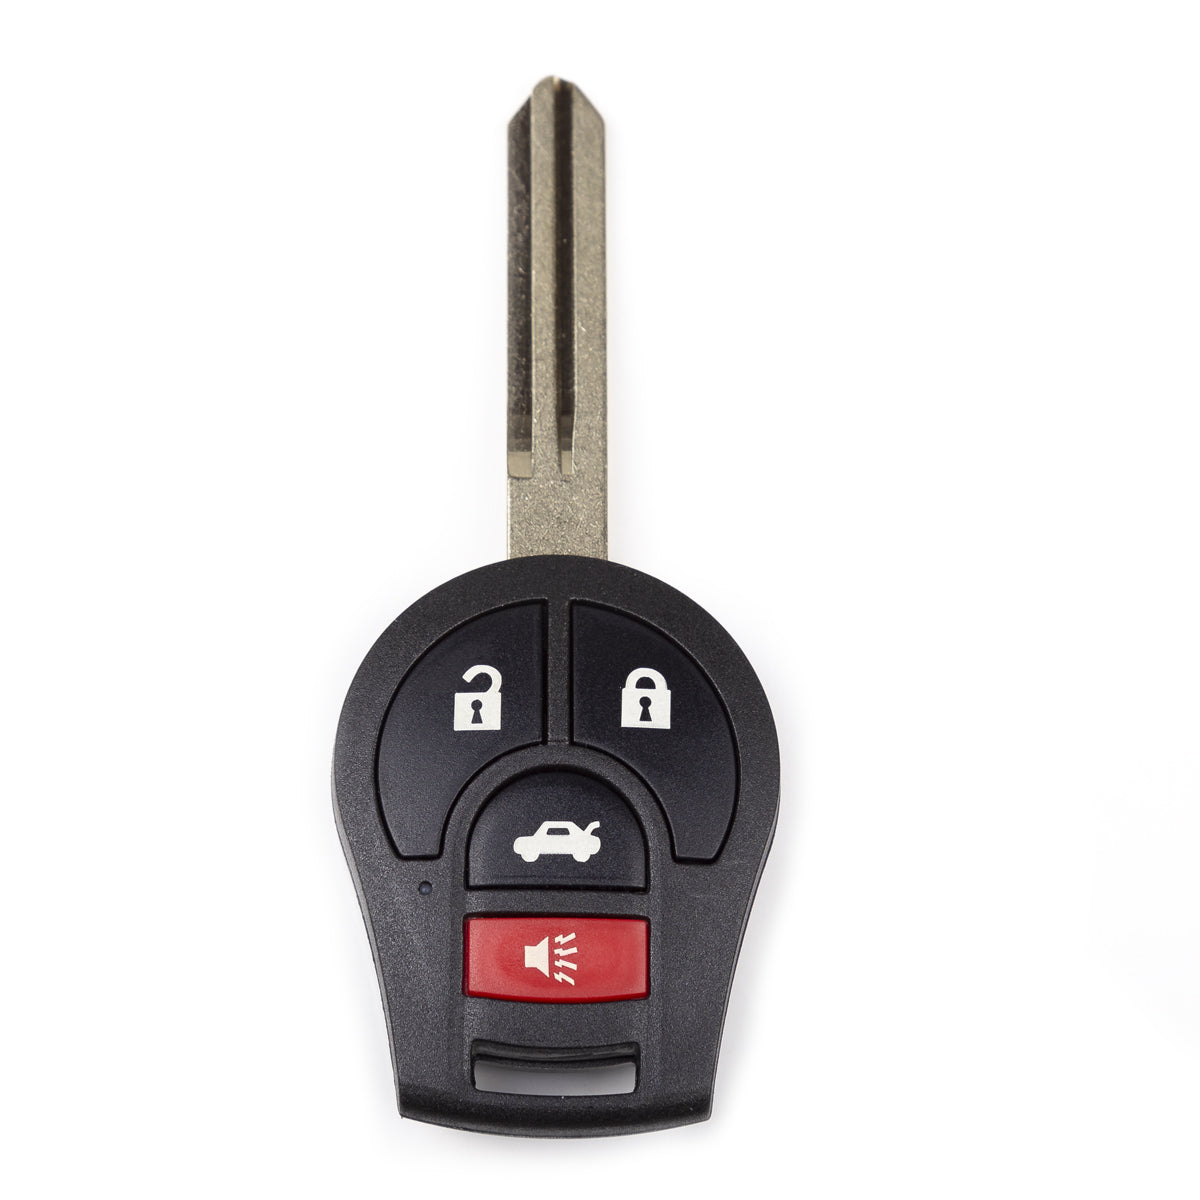 2008 Nissan Murano Key Fob - Aftermarket - 4 Buttons Fob FCC# CWTWB1U751 - ID46 Chip